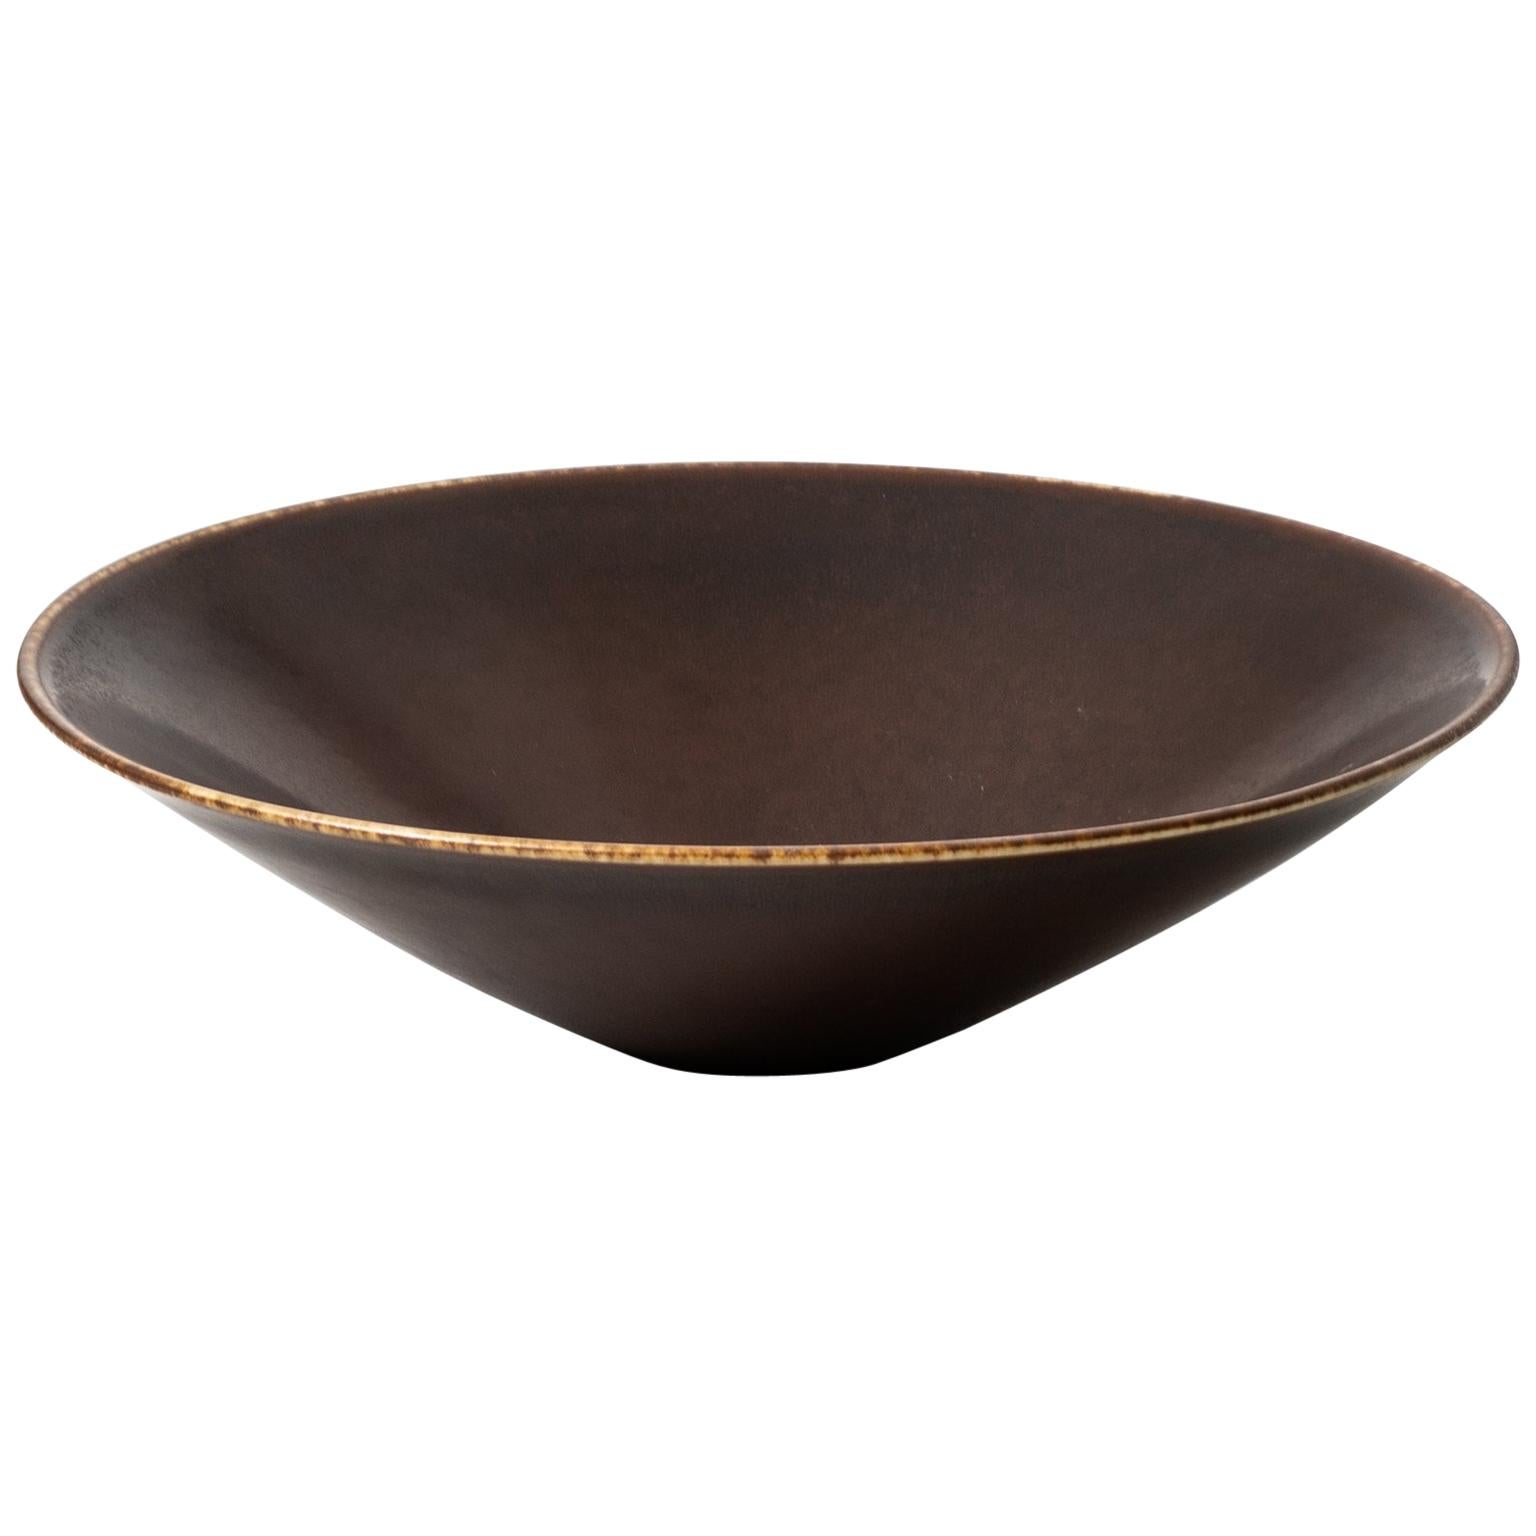 Carl-Harry Stålhane Ceramic Bowl by Rörstrand in Sweden